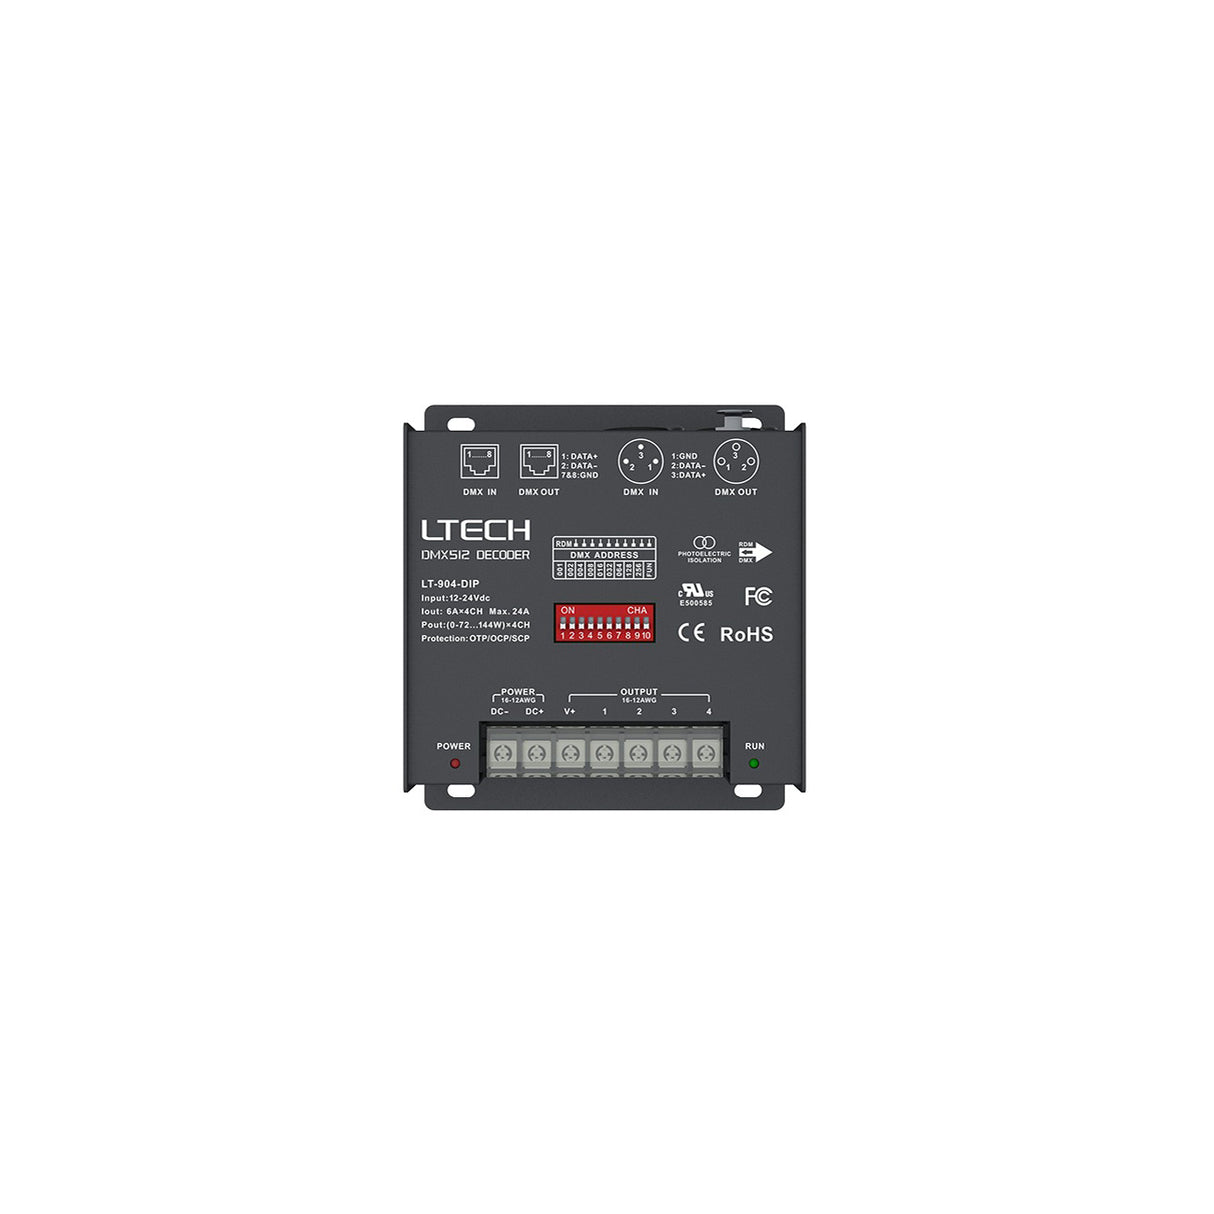 Ltech LT-904-DIP Constant Voltage Decoder - DMX/RDM